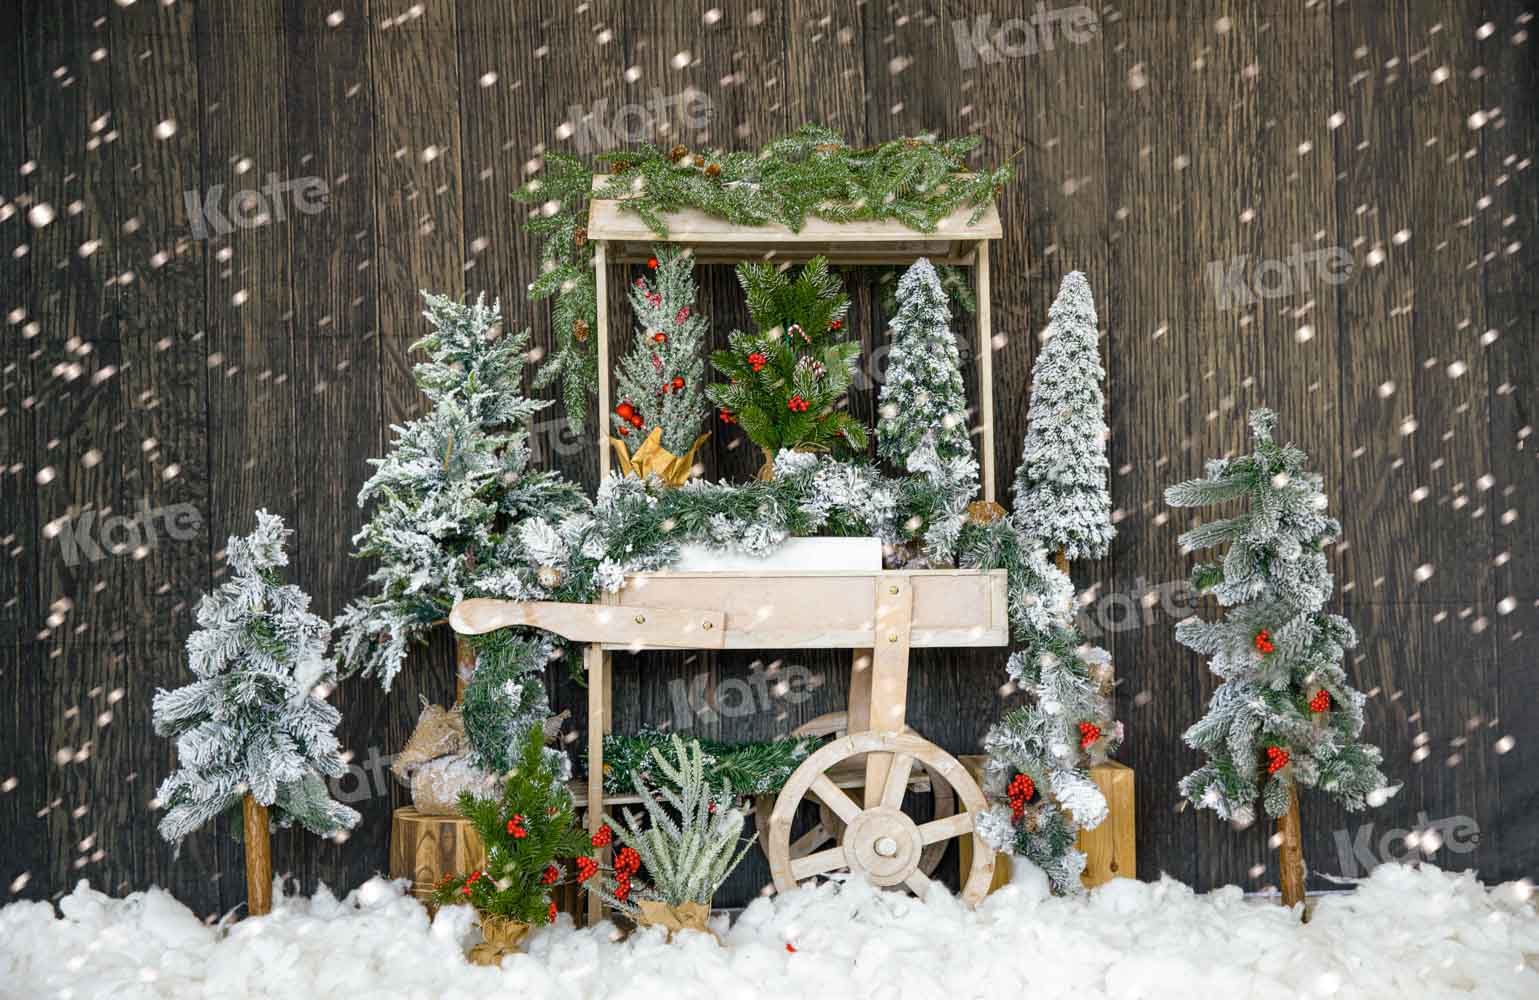 Kate Christmas Tree Backdrop Winter Snow Designed by Emetselch - Kate Backdrop